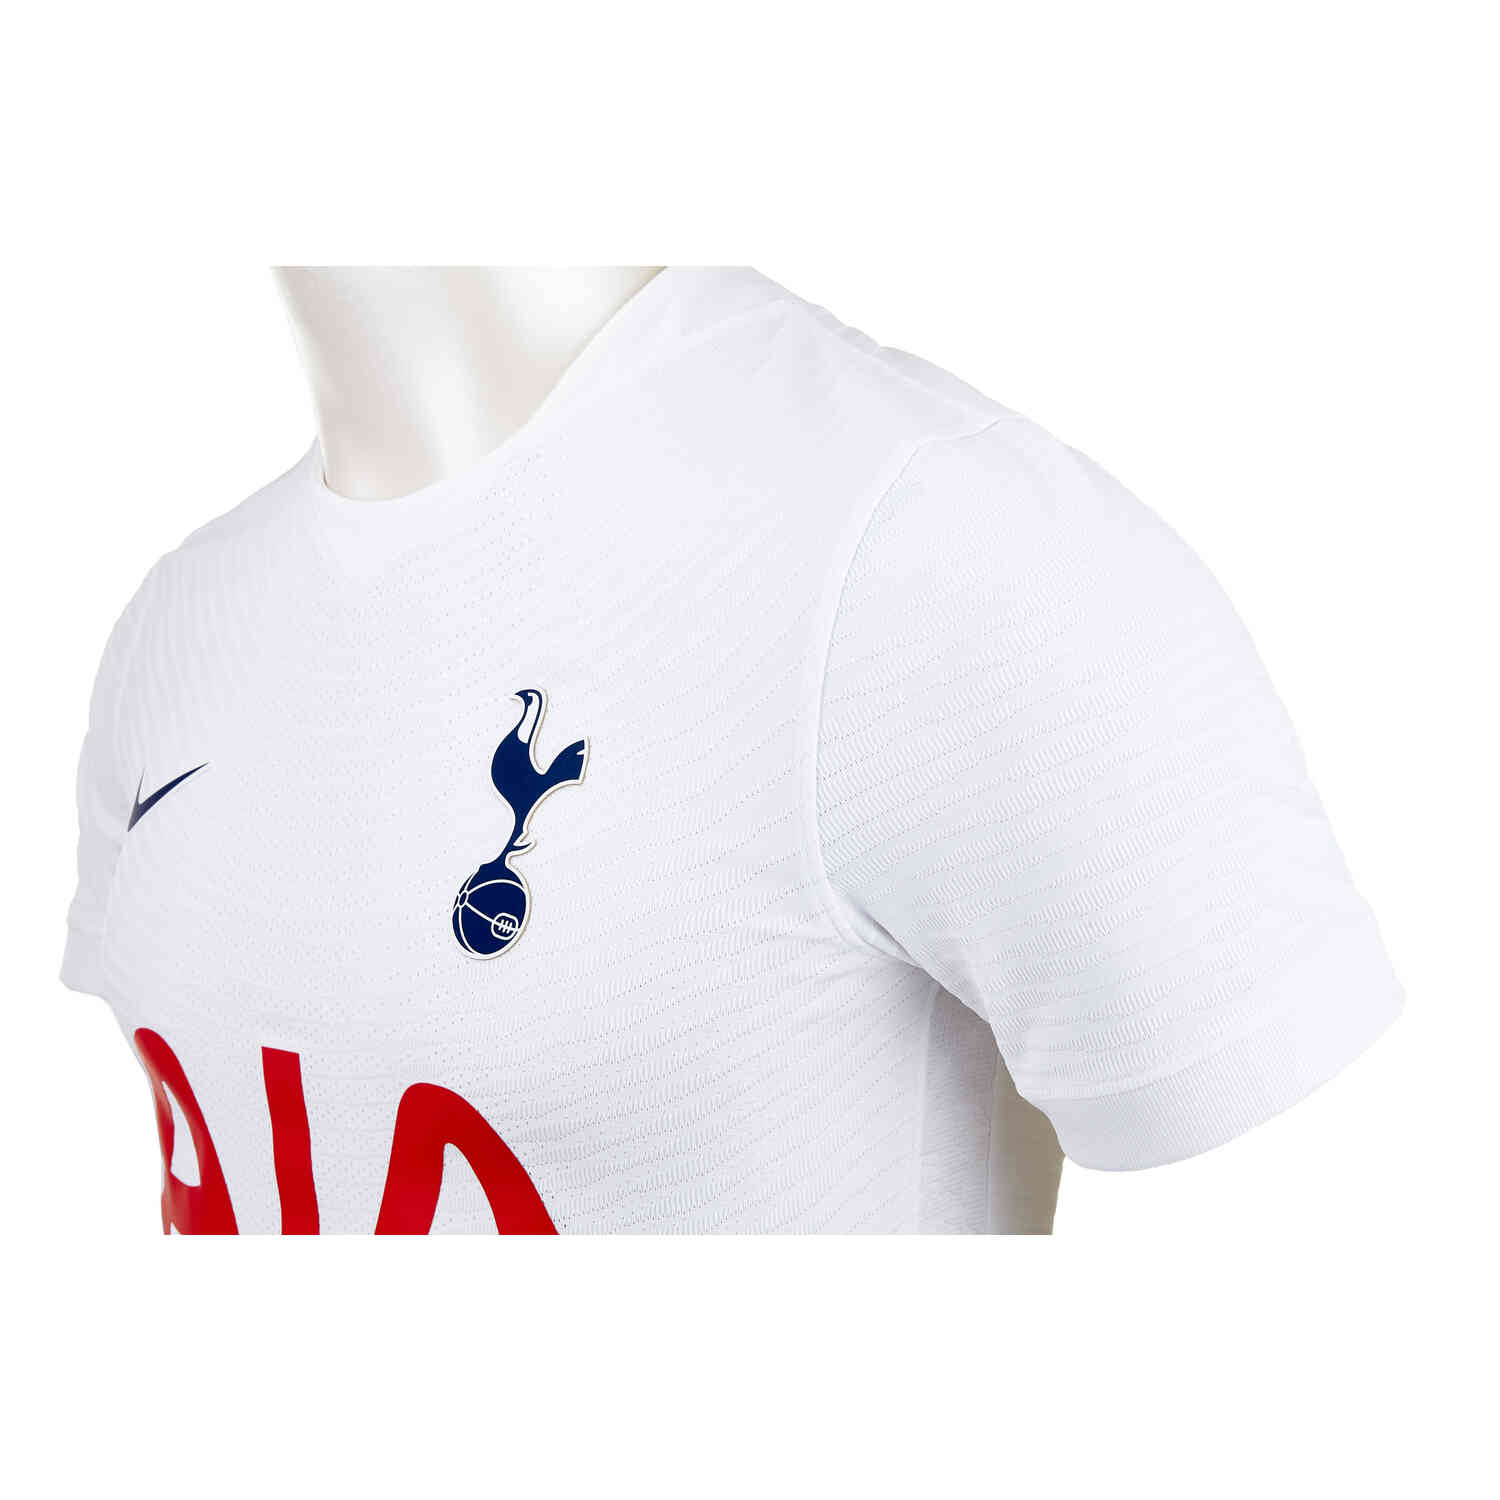 Nike Tottenham Home Match Jersey - 2021/22 - SoccerPro